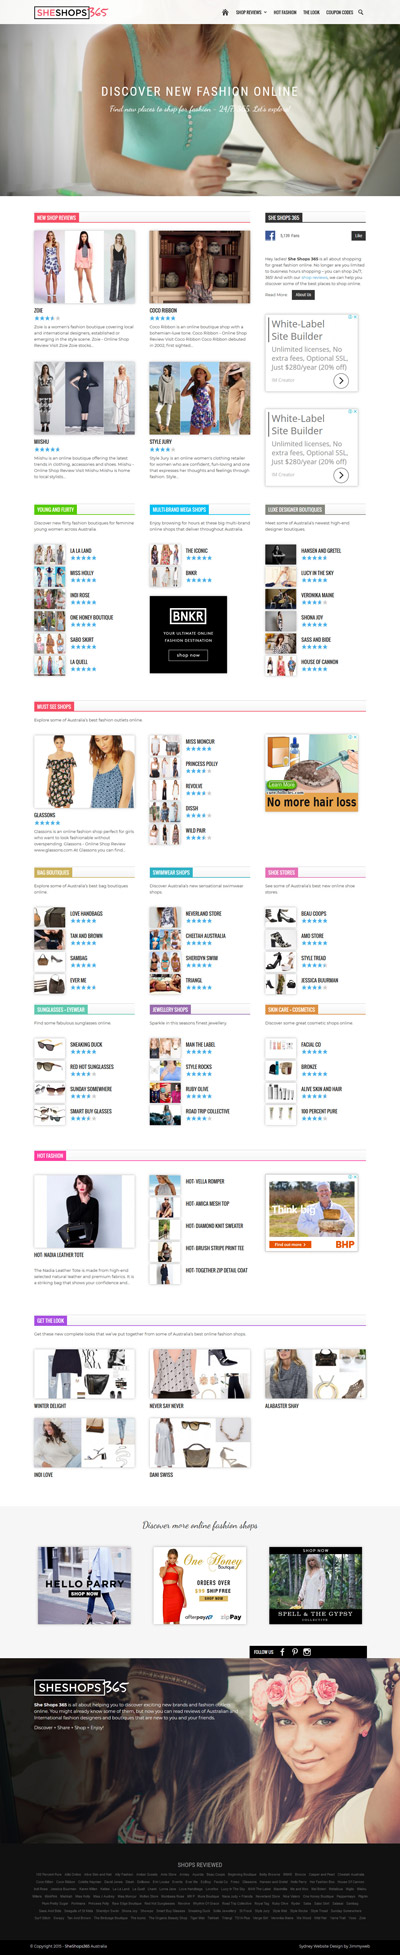 She Shops 365 - Web Design Case Study